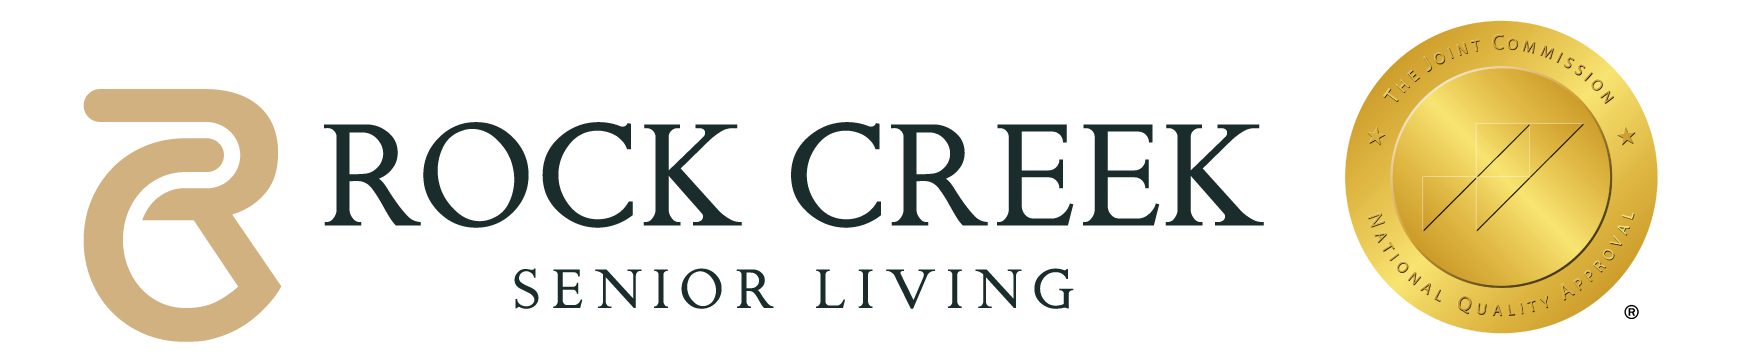 Rock Creek Senior Living - Joint Commission Award Badge